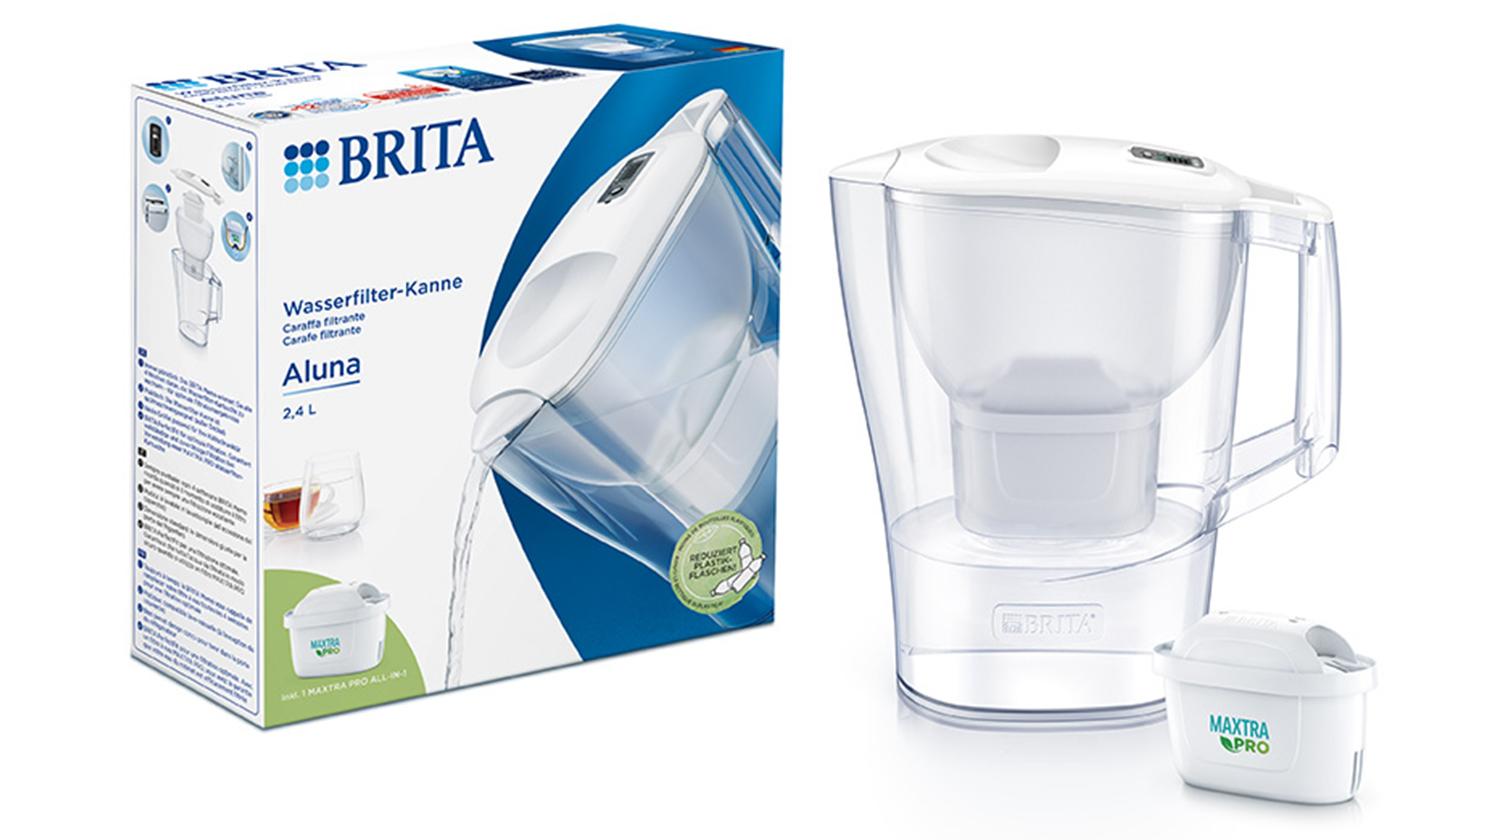 BRITA Aluna Water Filter Jug White 2.4L with New Maxtra Pro Filter